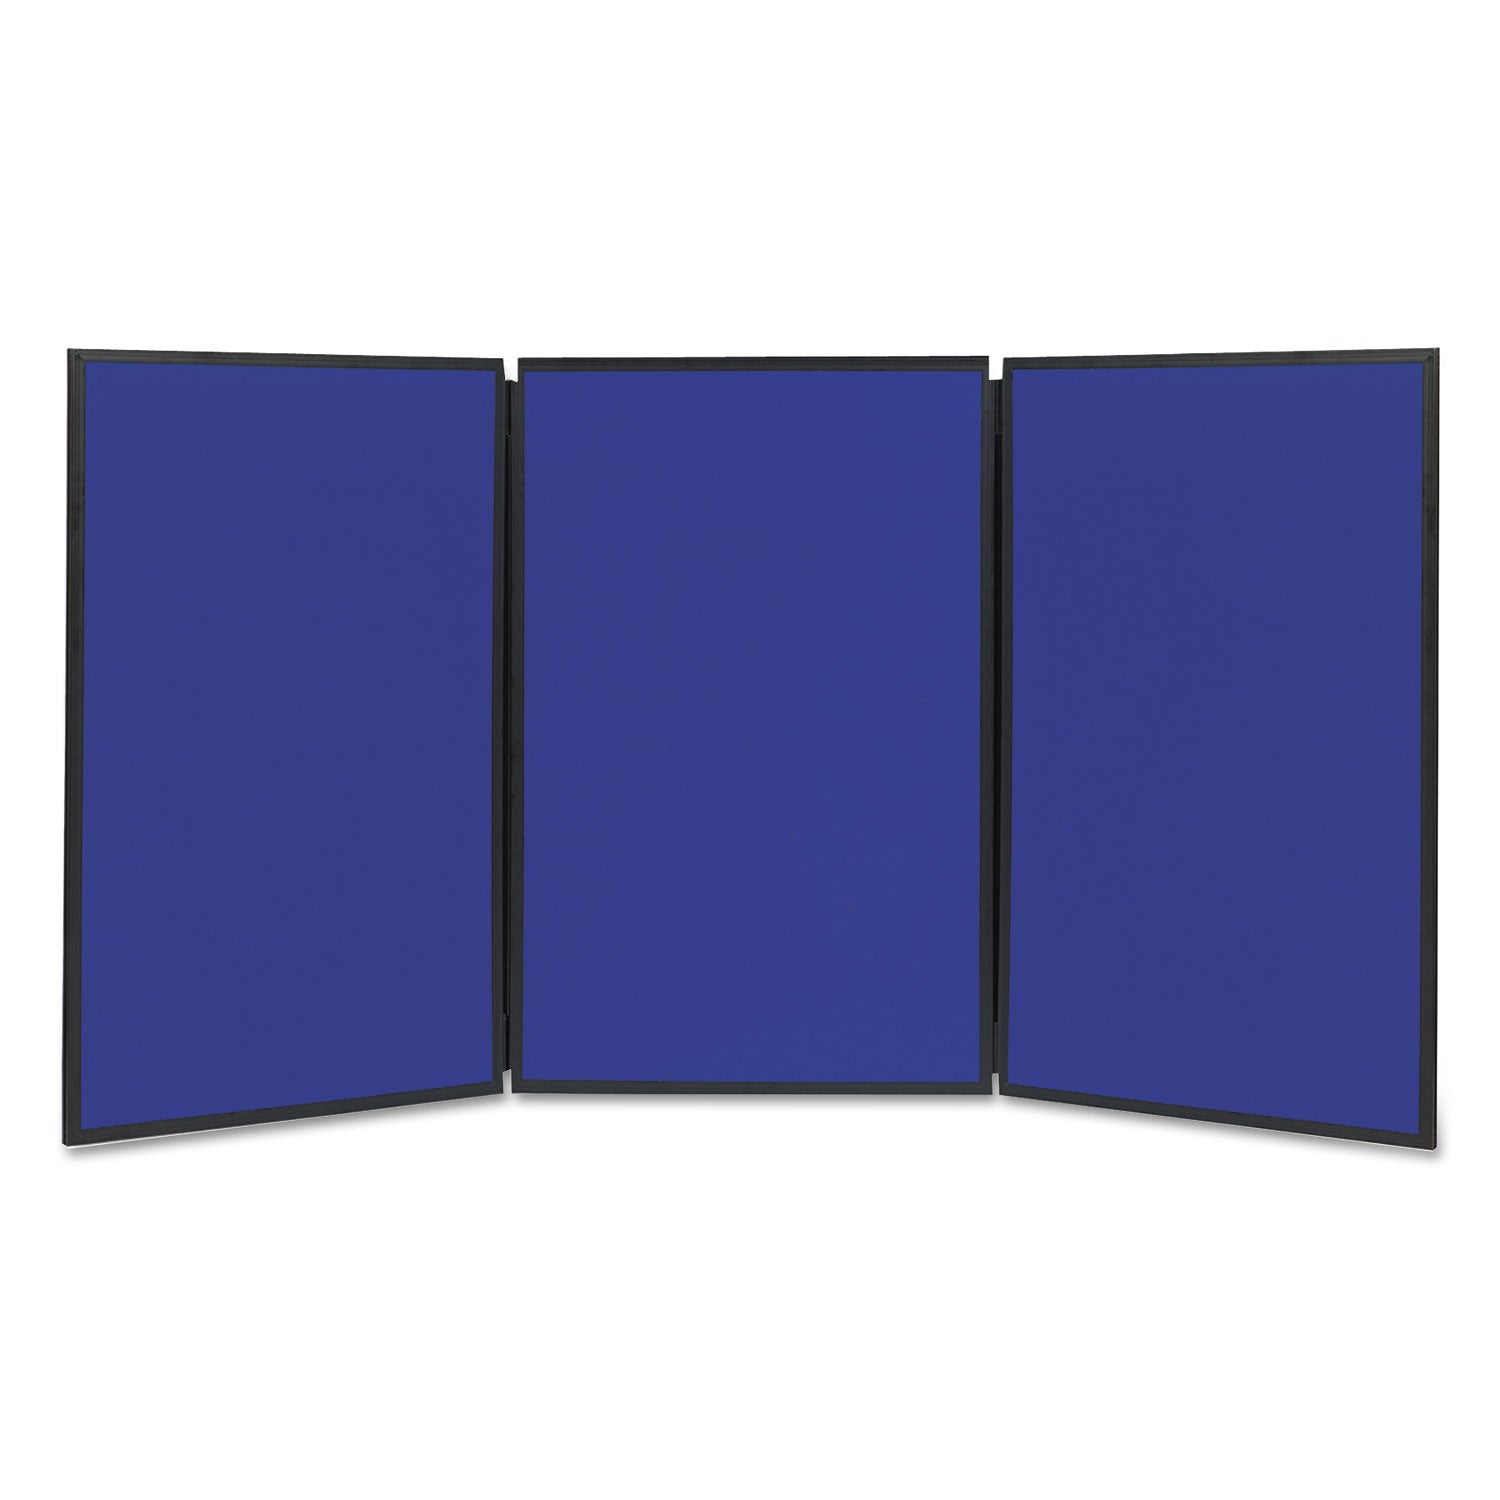 Show-It! Display System, Three-Panel Display, 72 x 36, Blue/Gray Surface, Black PVC Frame - 